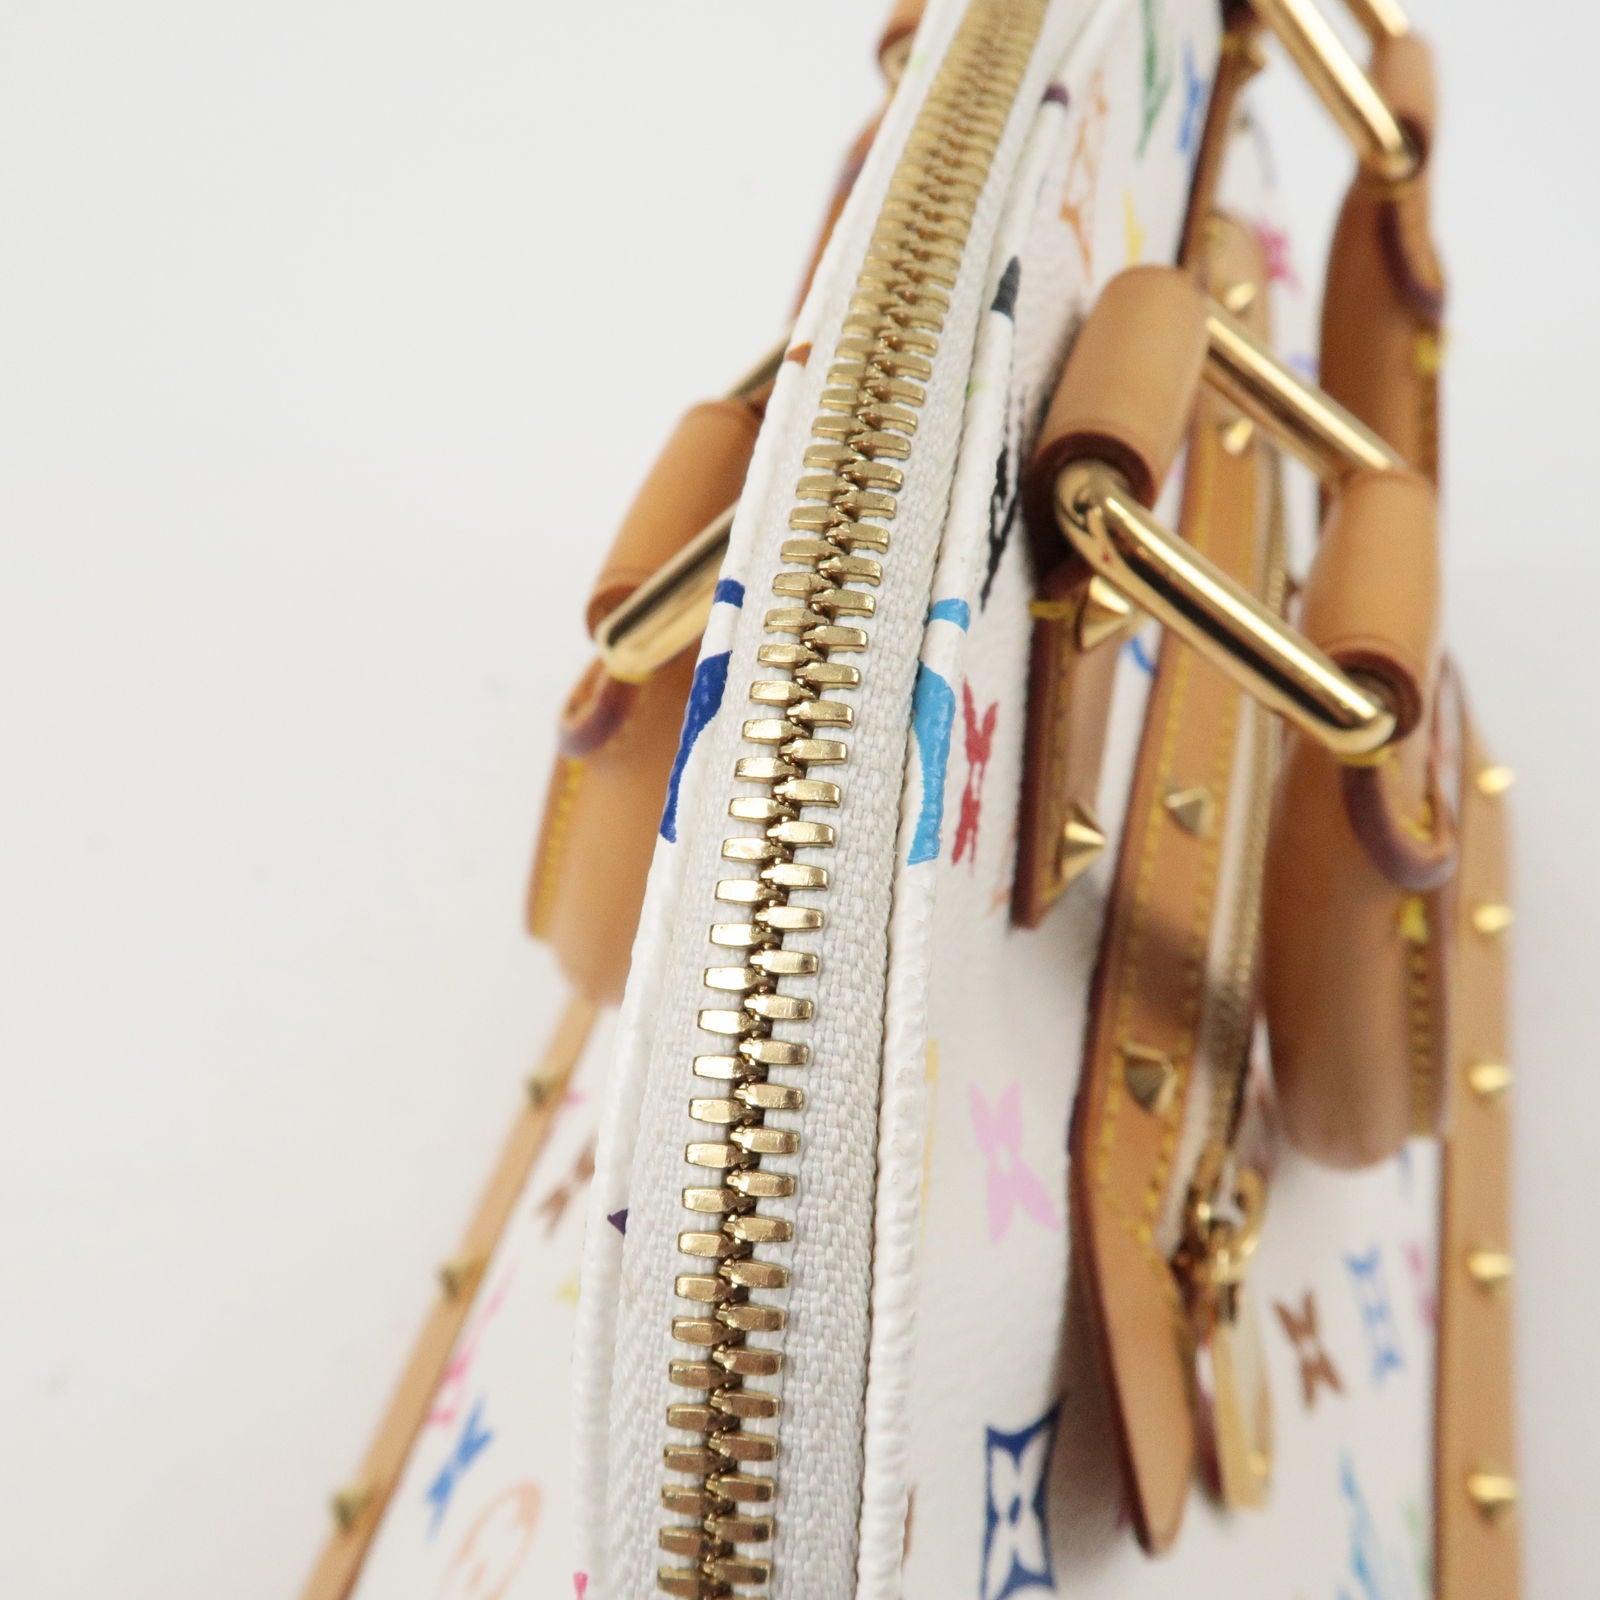 A closer look at a monogram handbag from the Louis Vuitton Cruise